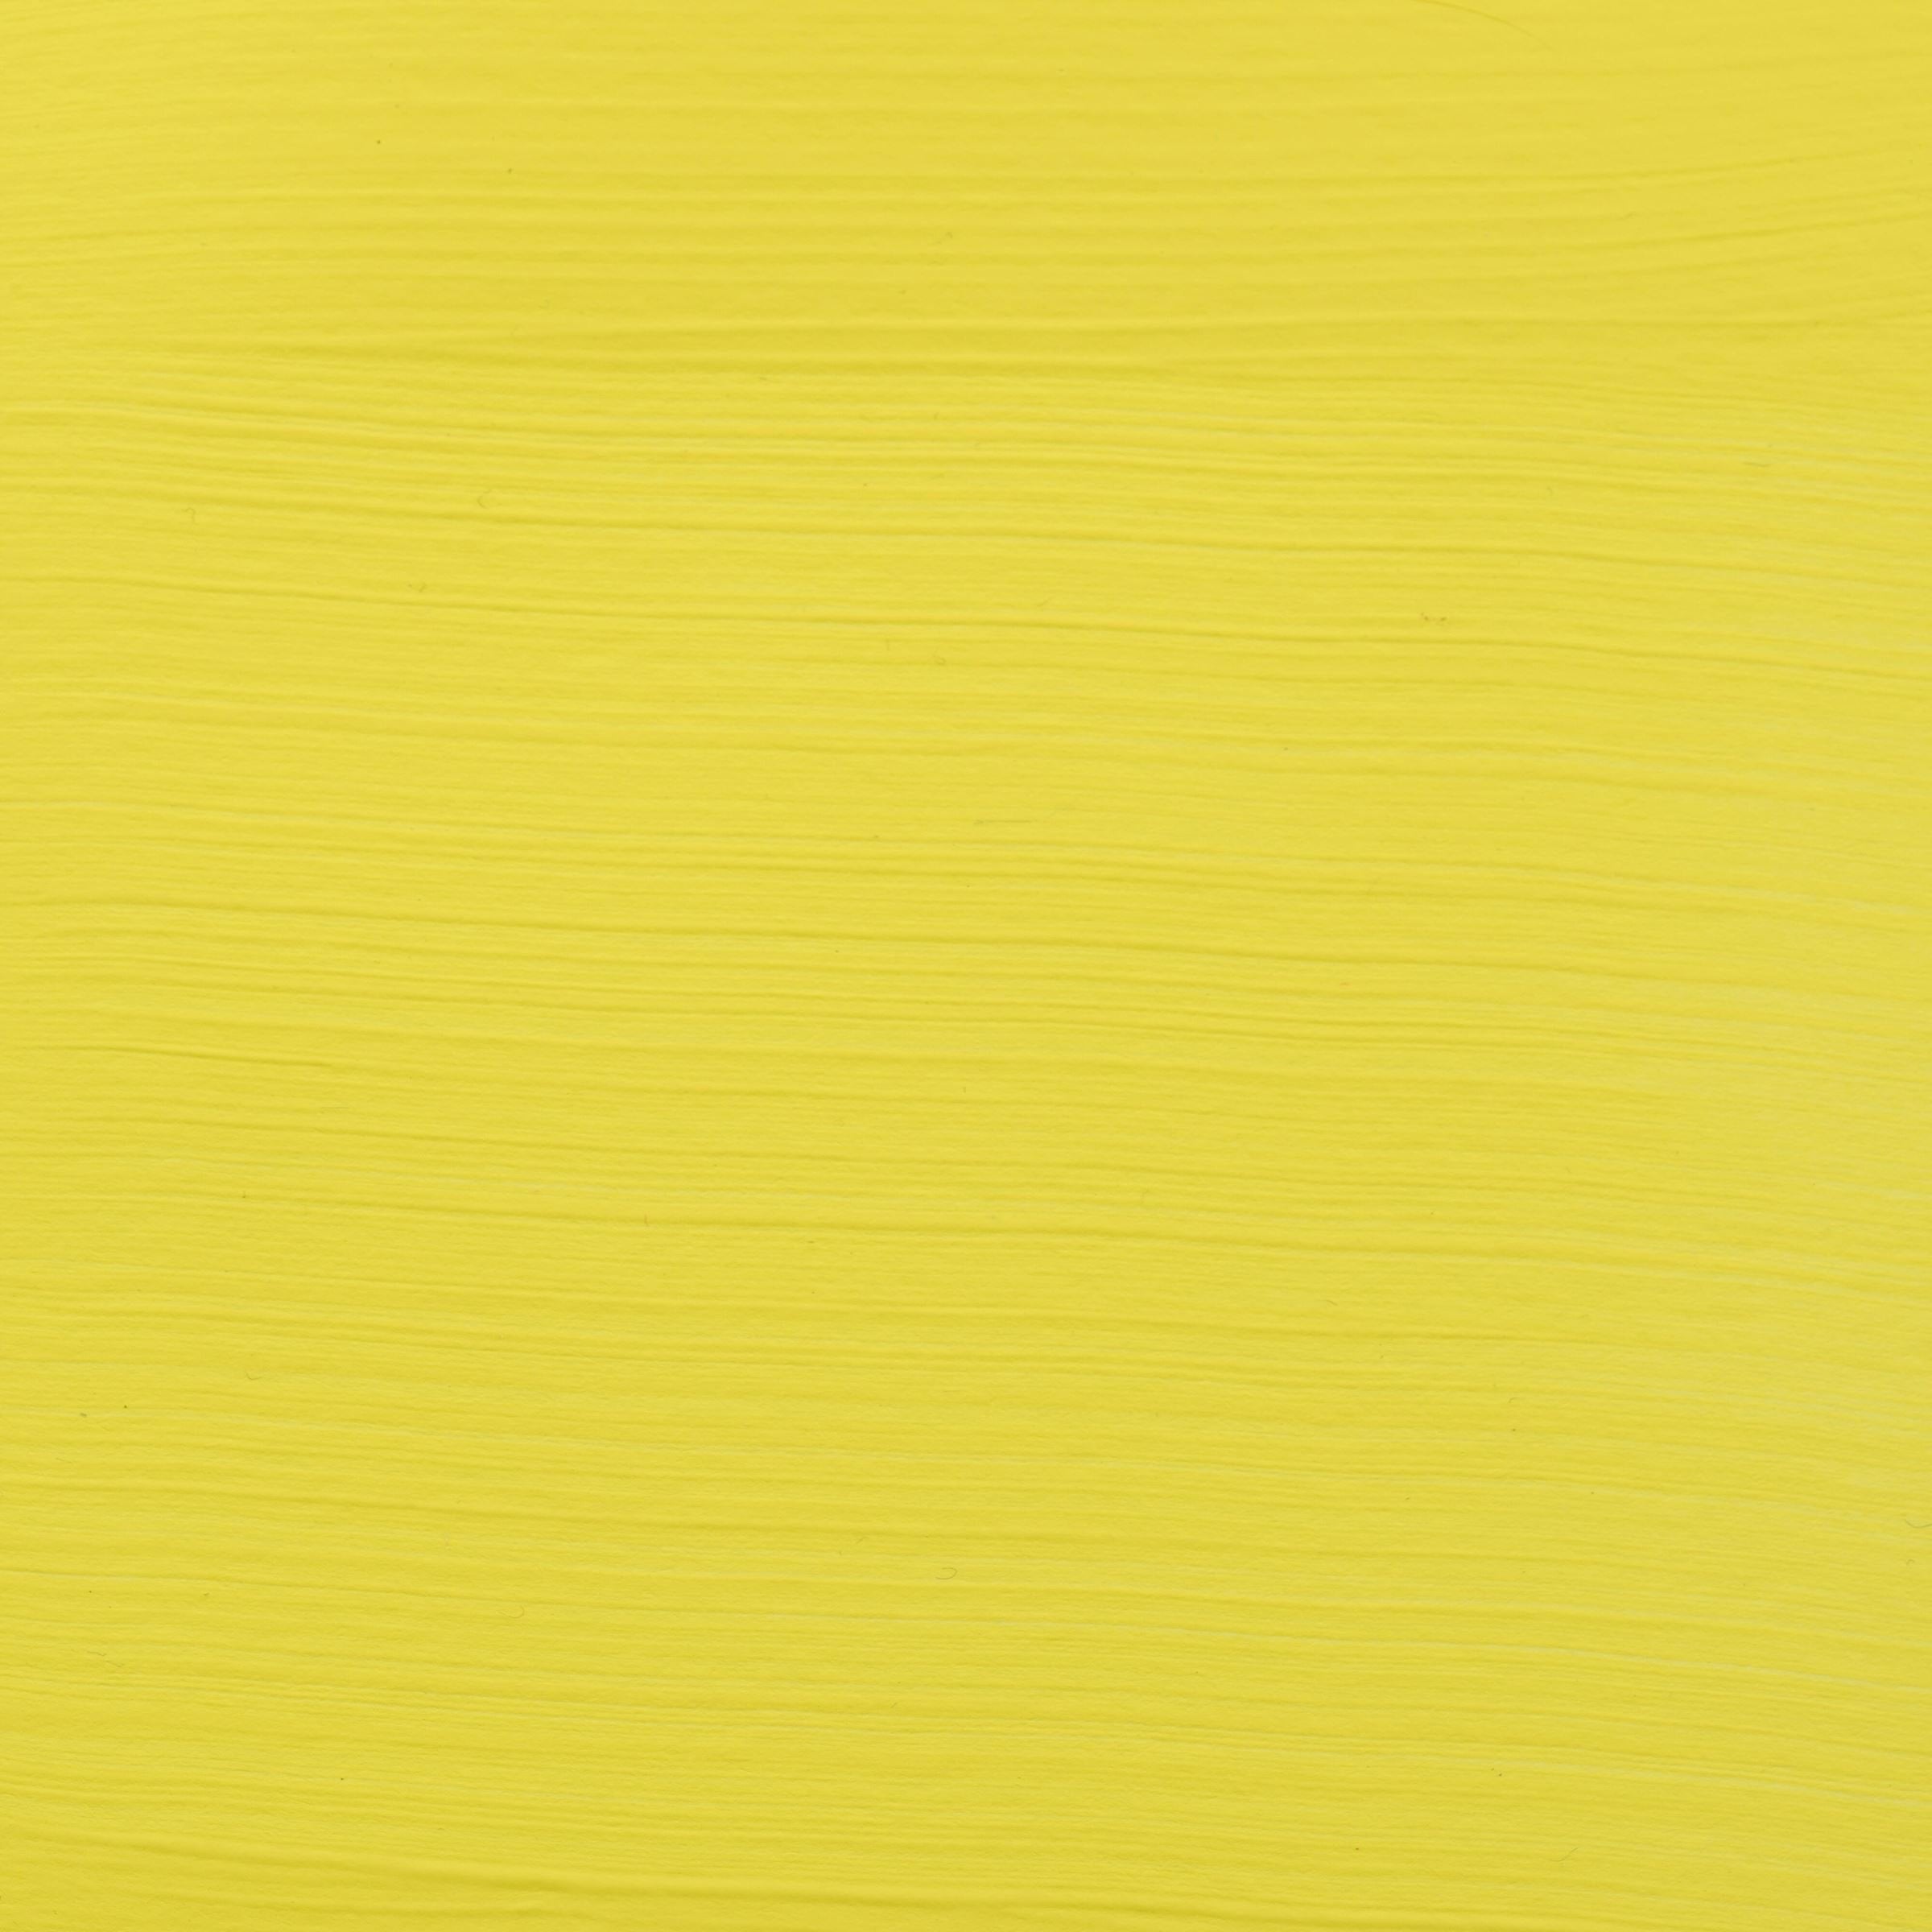 Amsterdam Acrylics Standard Series 120ml Reflex Yellow